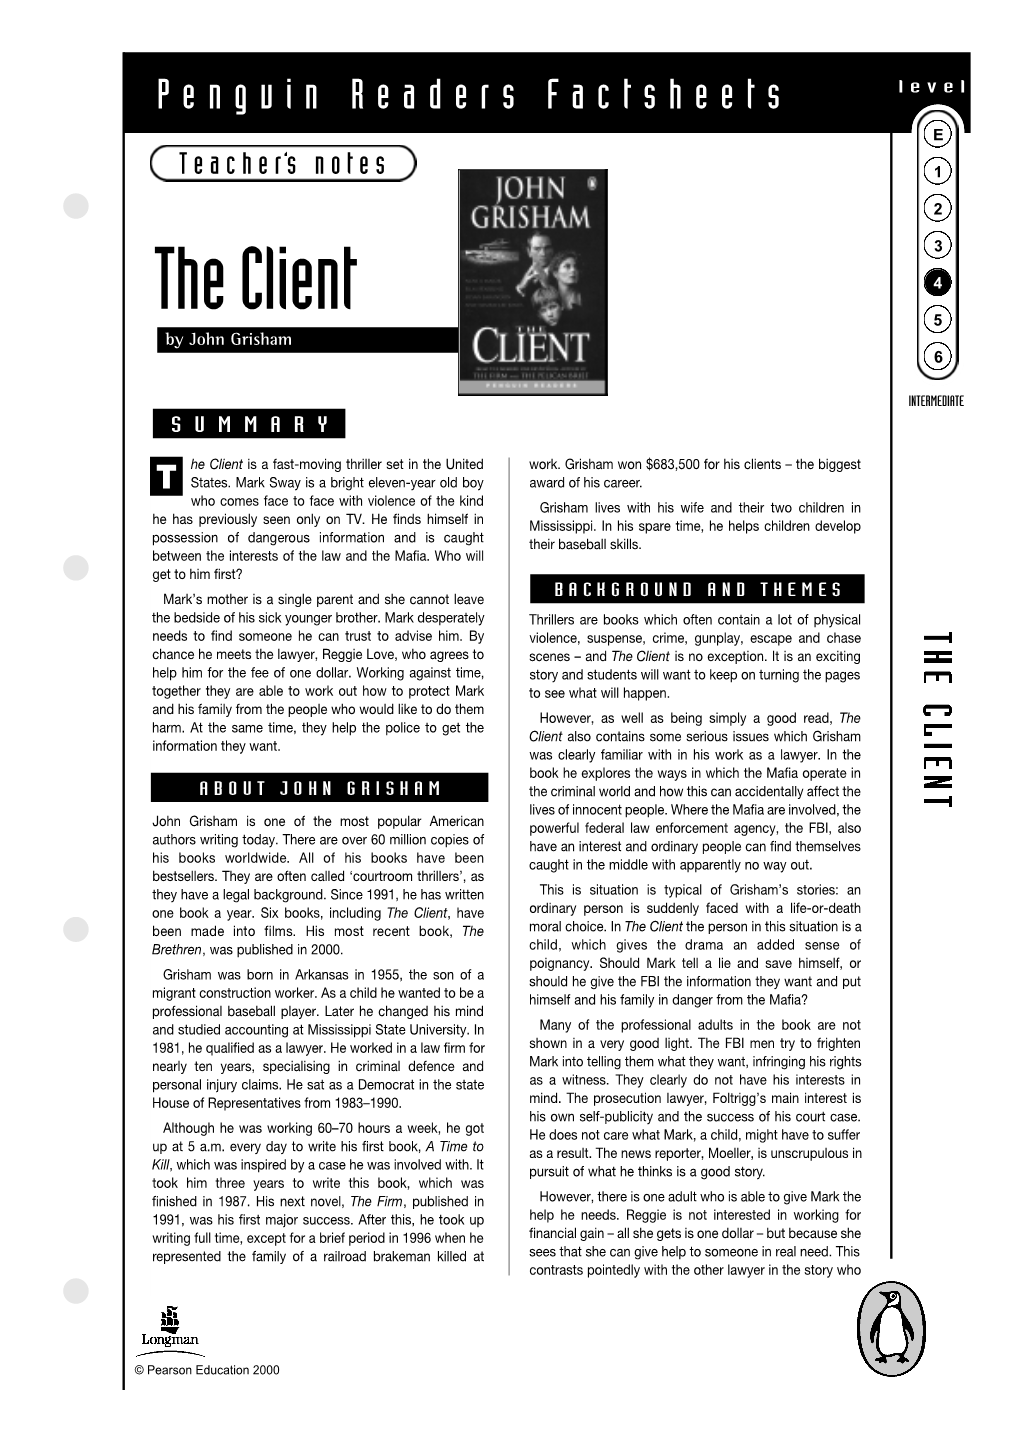 The Client 4 5 by John Grisham 6